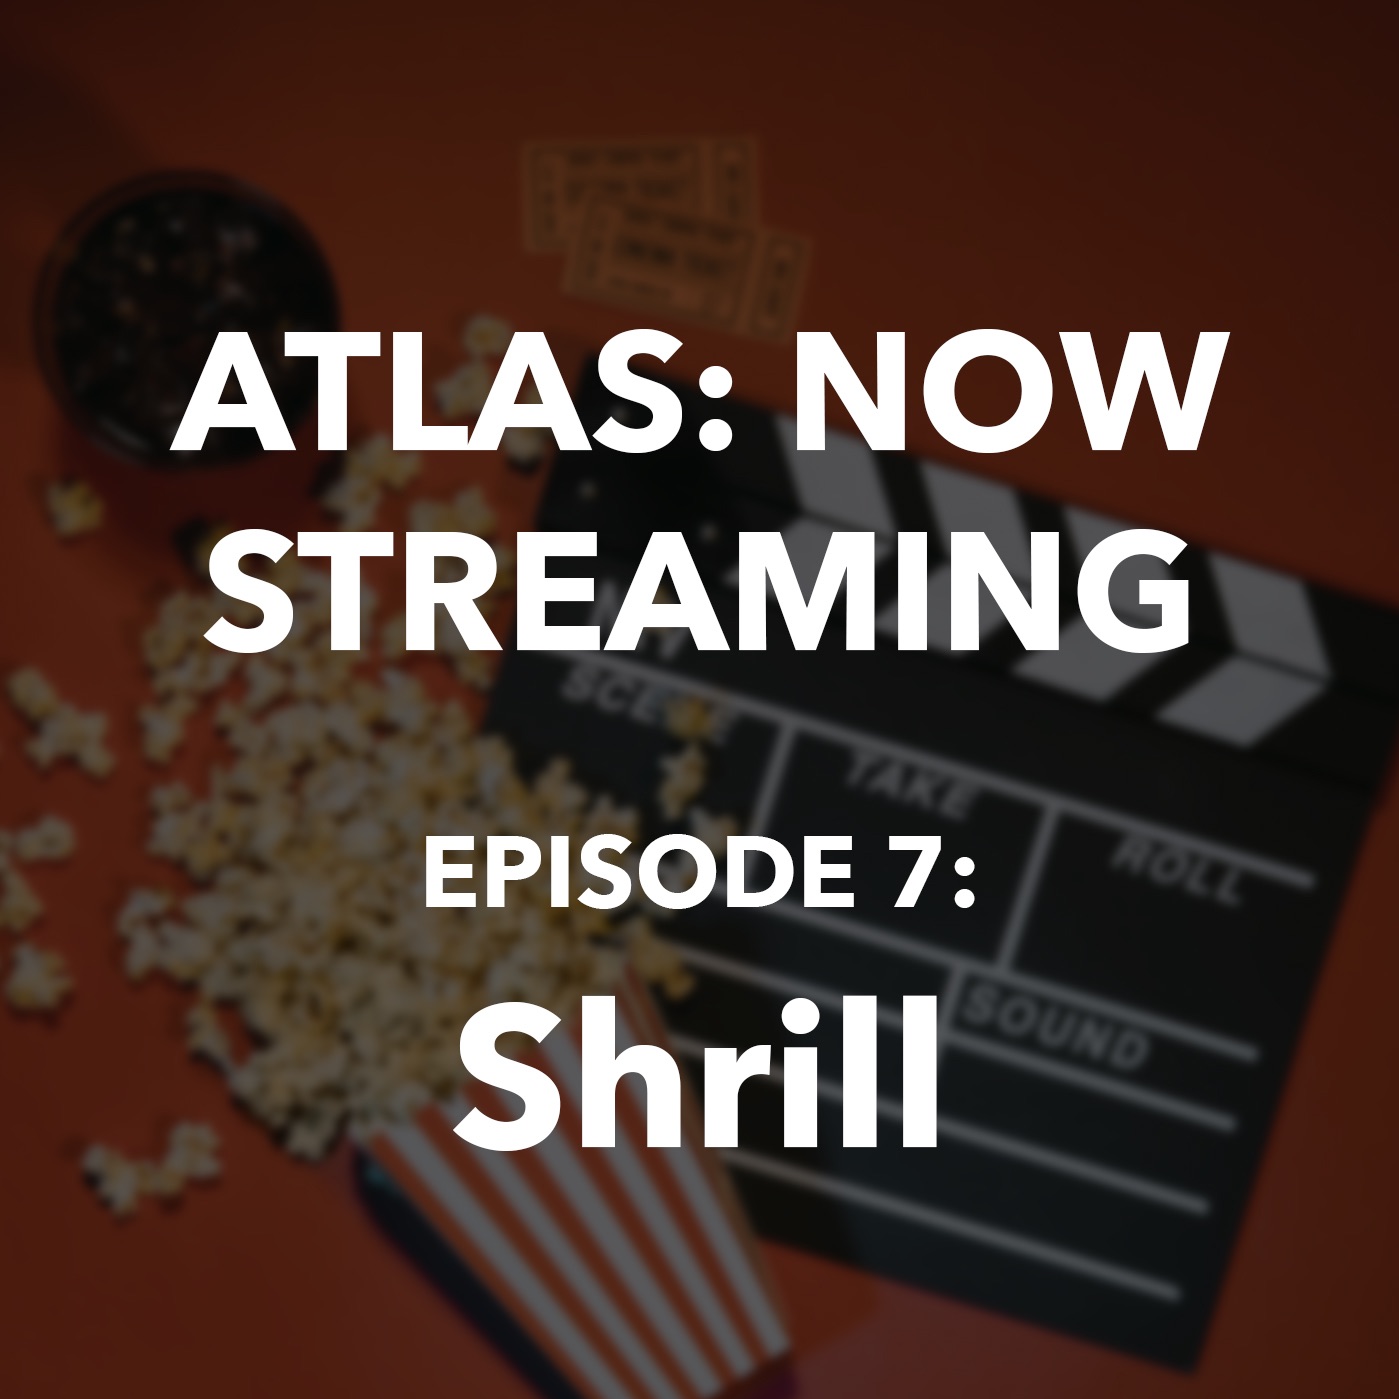 Atlas: Now Streaming Episode 7 - Shrill